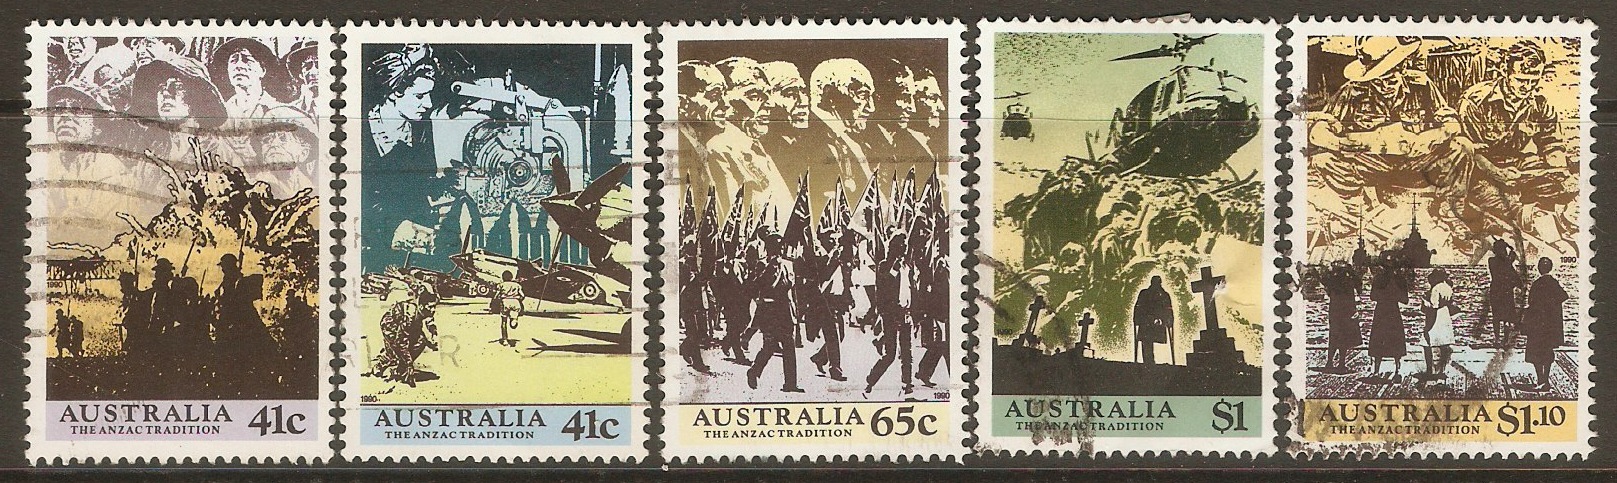 Australia 1990 The Anzac Tradition set. SG1241-SG1245.